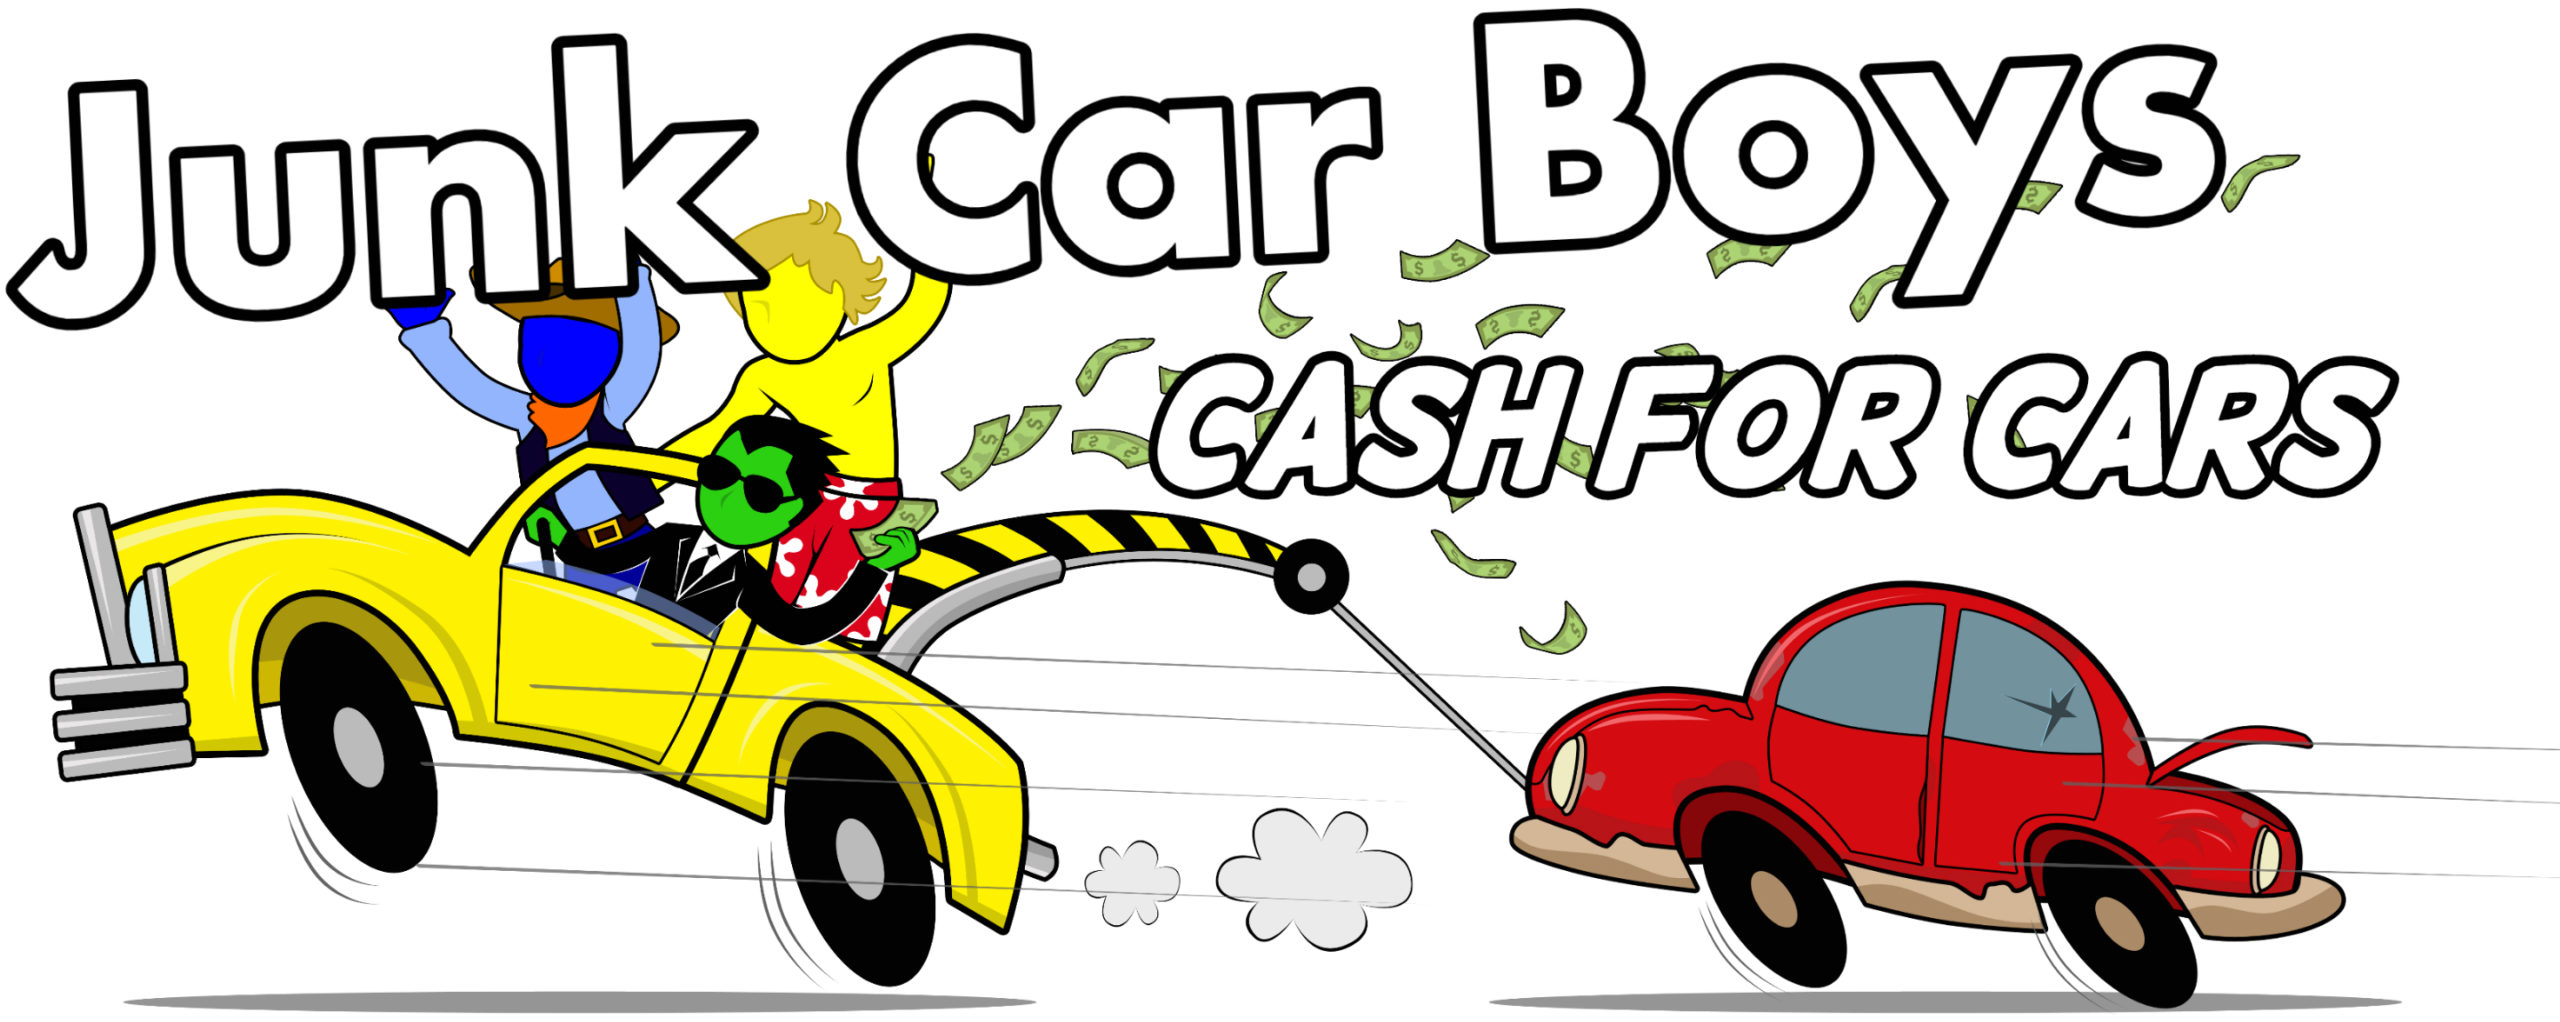 home-junk-car-boys-cash-for-cars-jacksonville